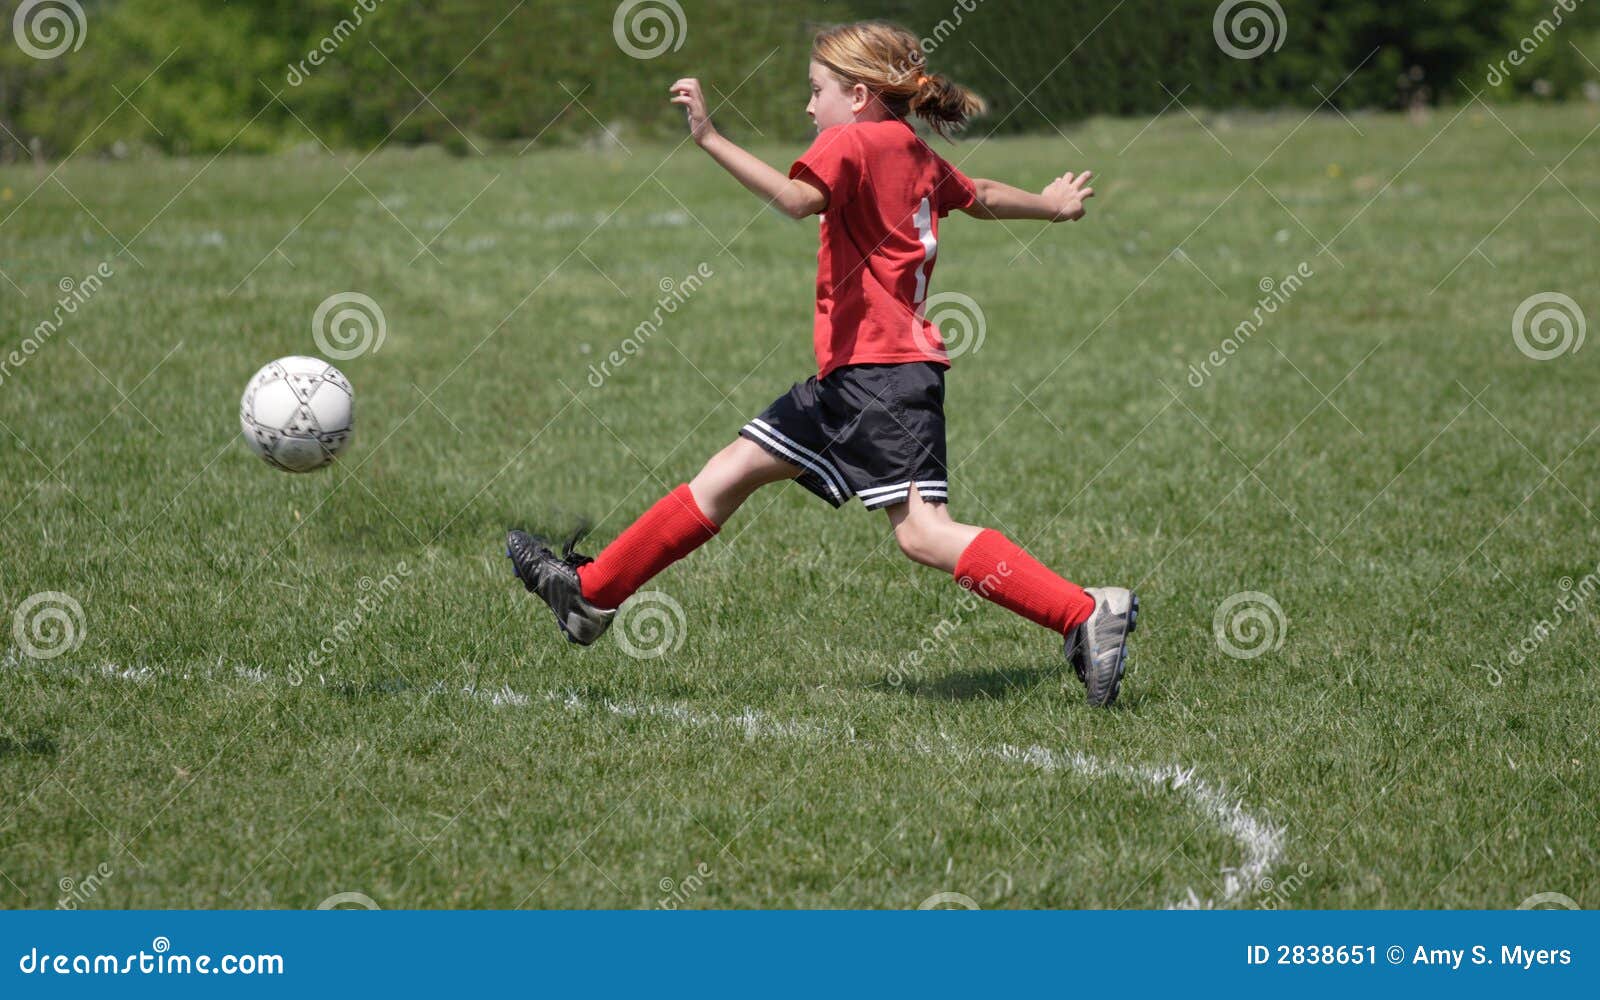 Soccer Player Kicking Ball 4 Stock Image - Image of back, playing: 2838651